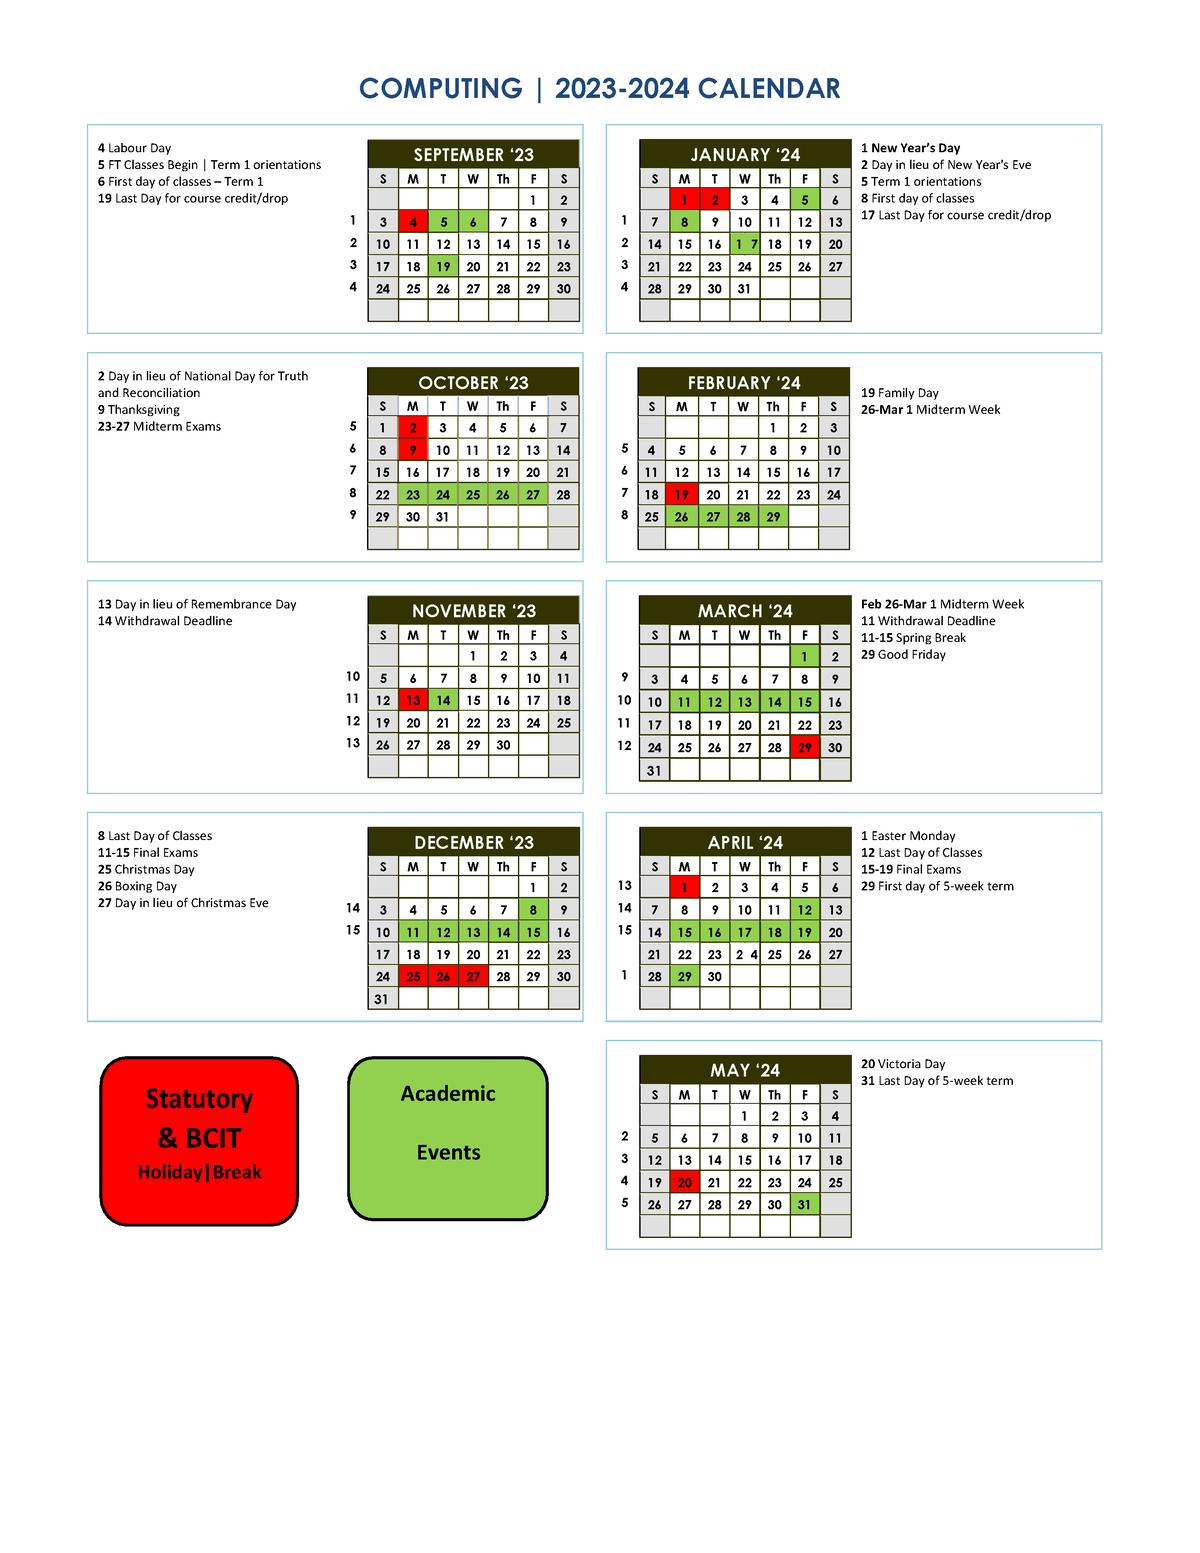 CST Calendar September 2023 May 2024 COMPUTING 20232024 CALENDAR